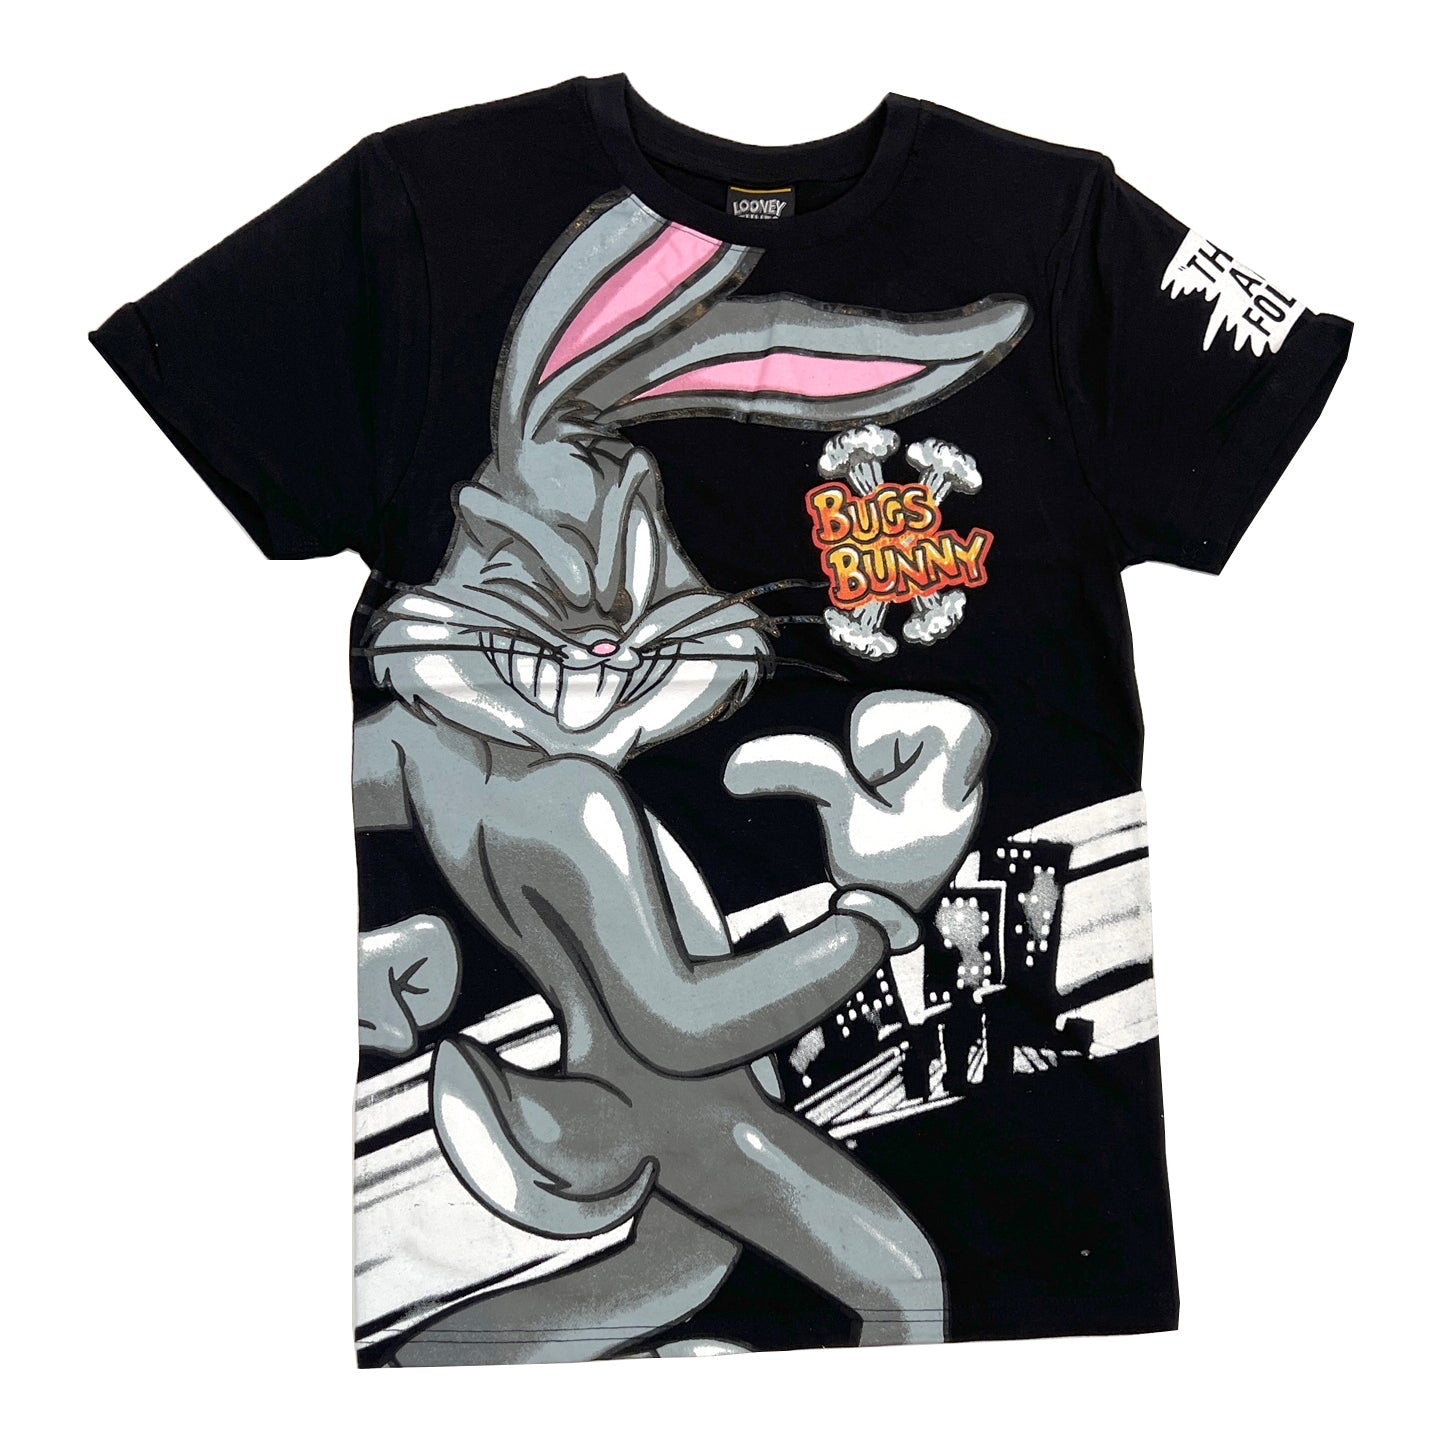 (Black) $16.99 $30 2 / Bunny for Gel Tunes Print Tee Bugs Looney